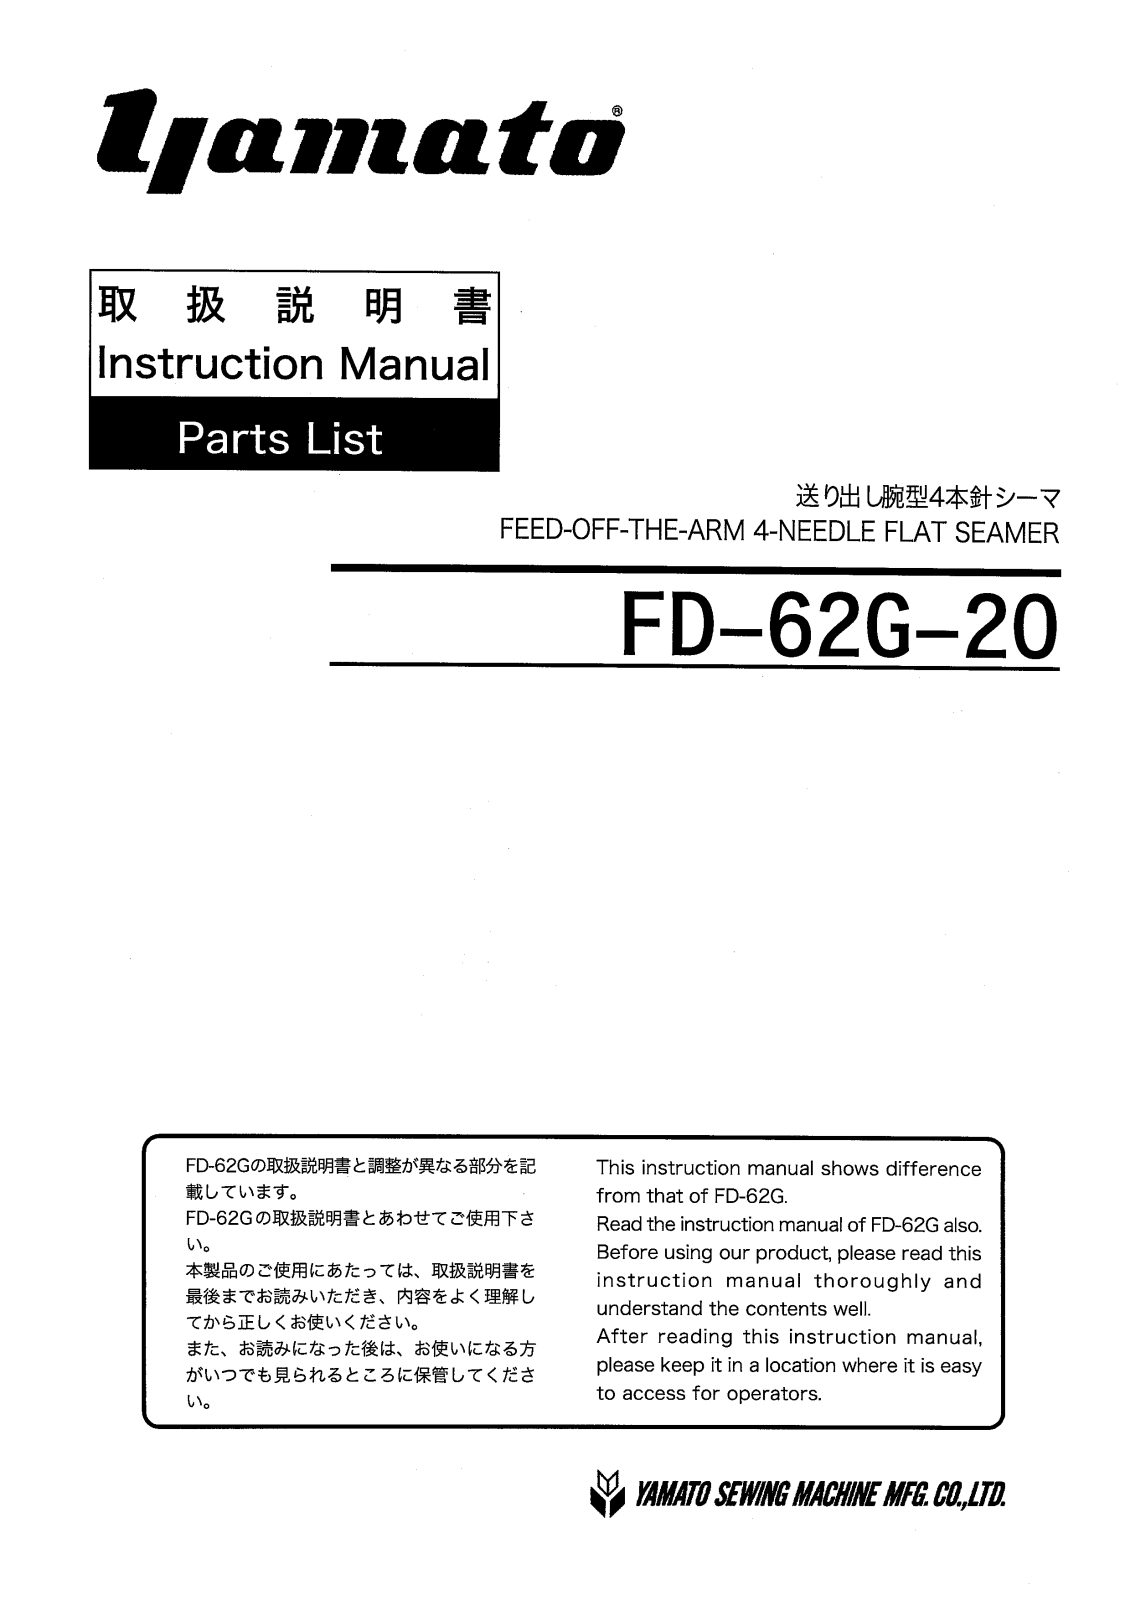 YAMATO FD-62G-20 Parts List